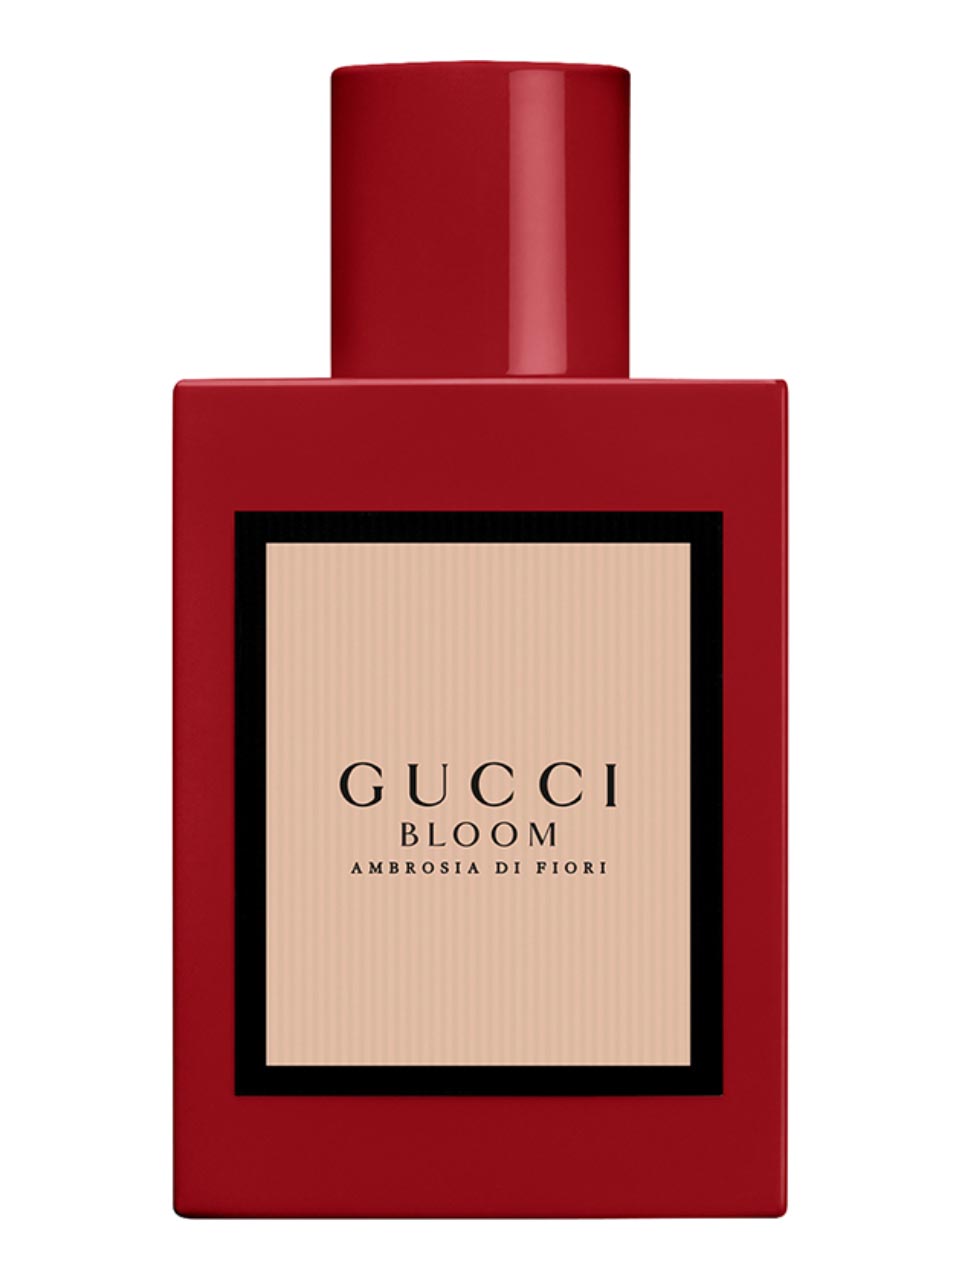 Gucci Bloom Ambrosia di Fiori Eau de Parfum 50 ml null - onesize - 1